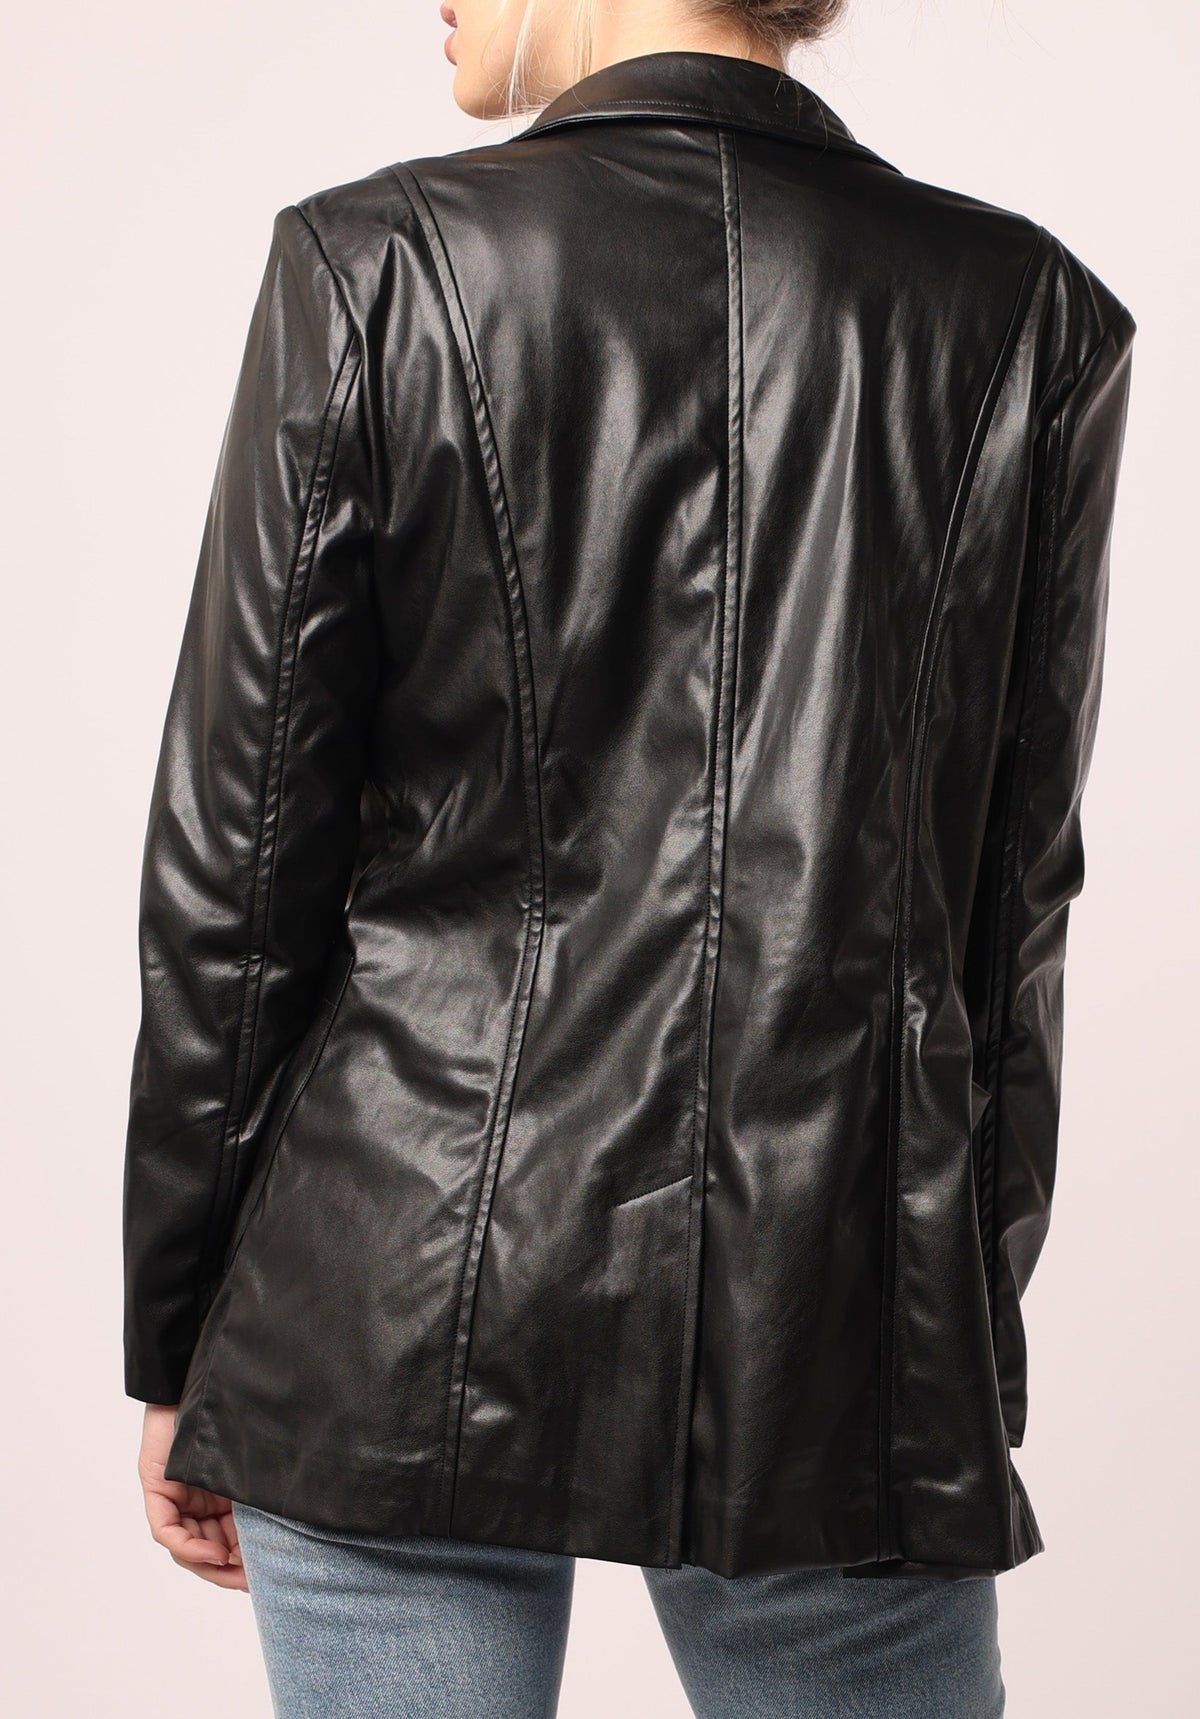 paige-blazer-jacket-black